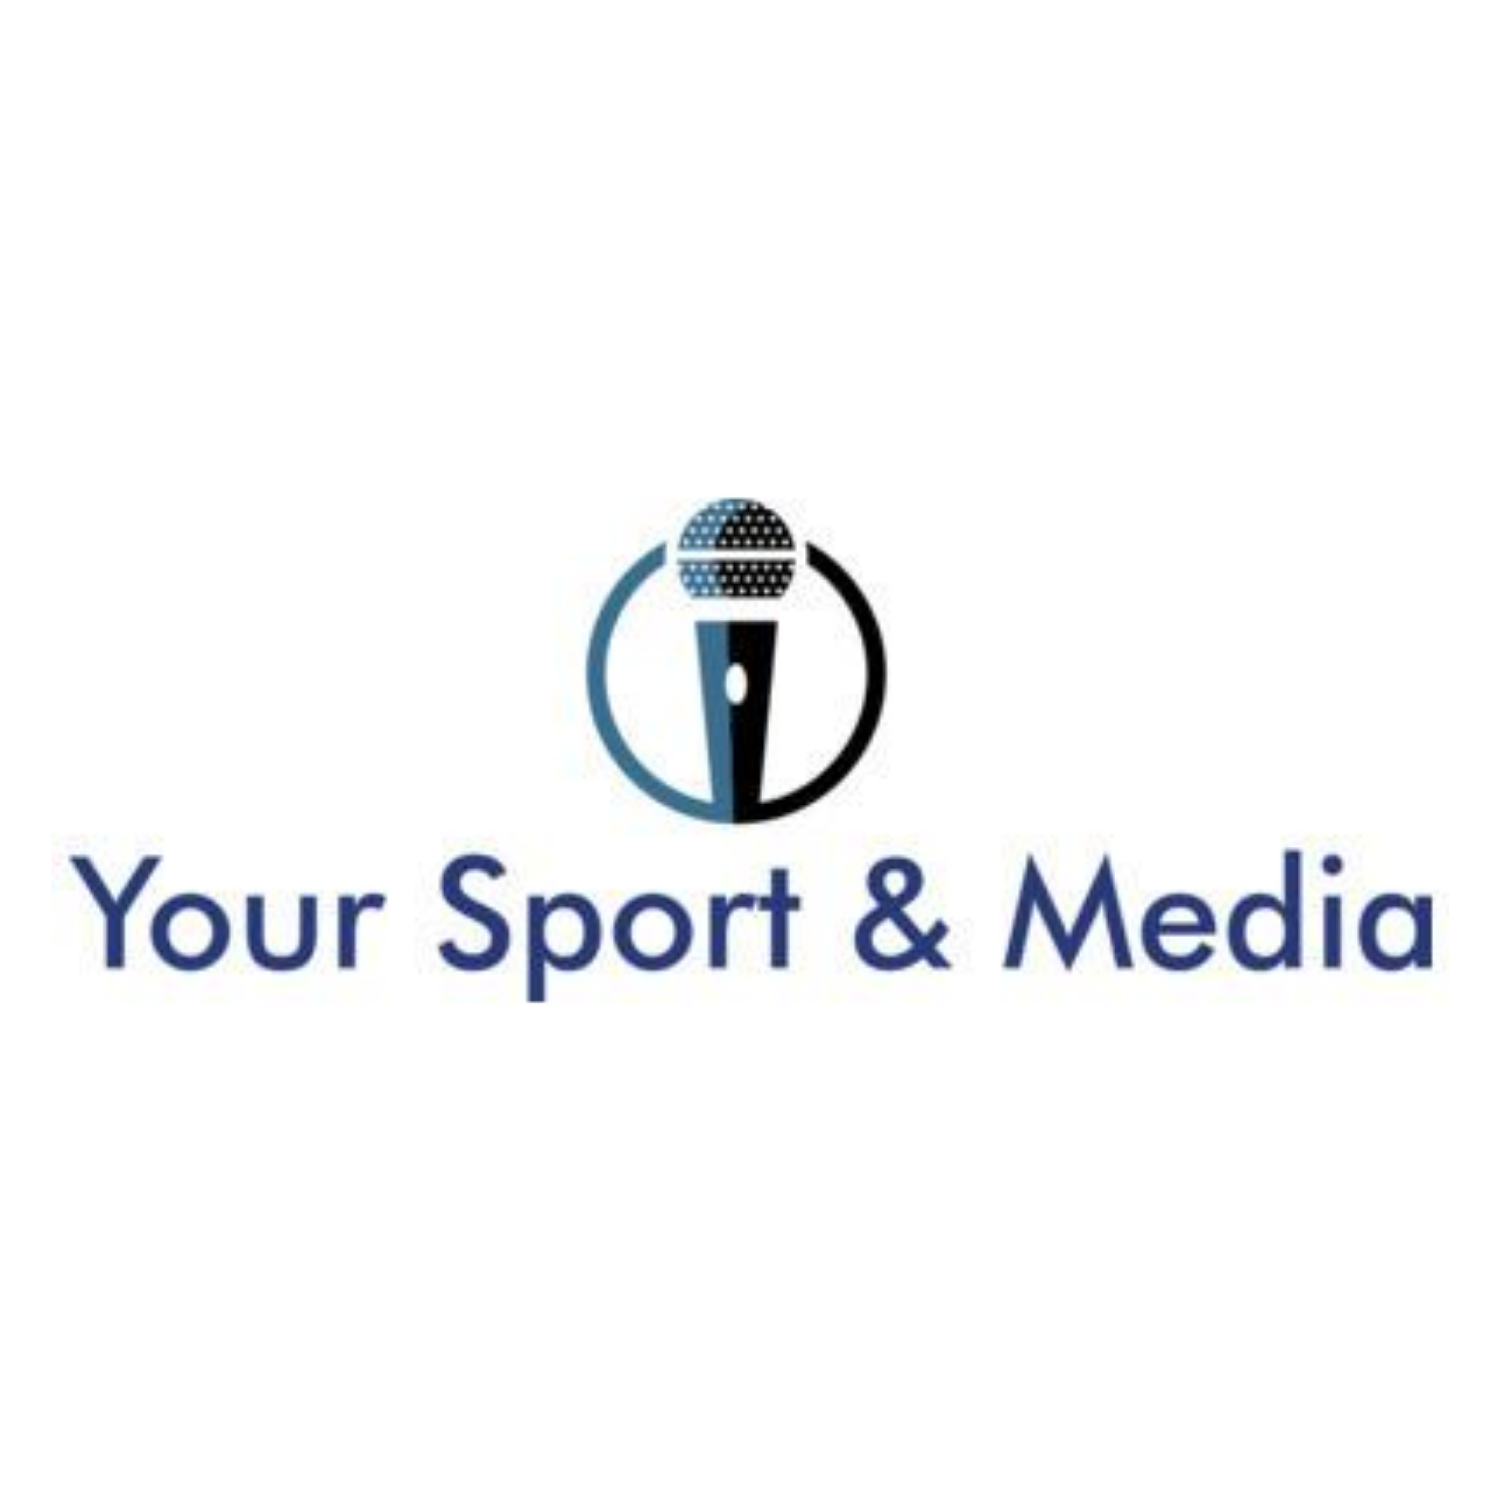 Your Sport & Media